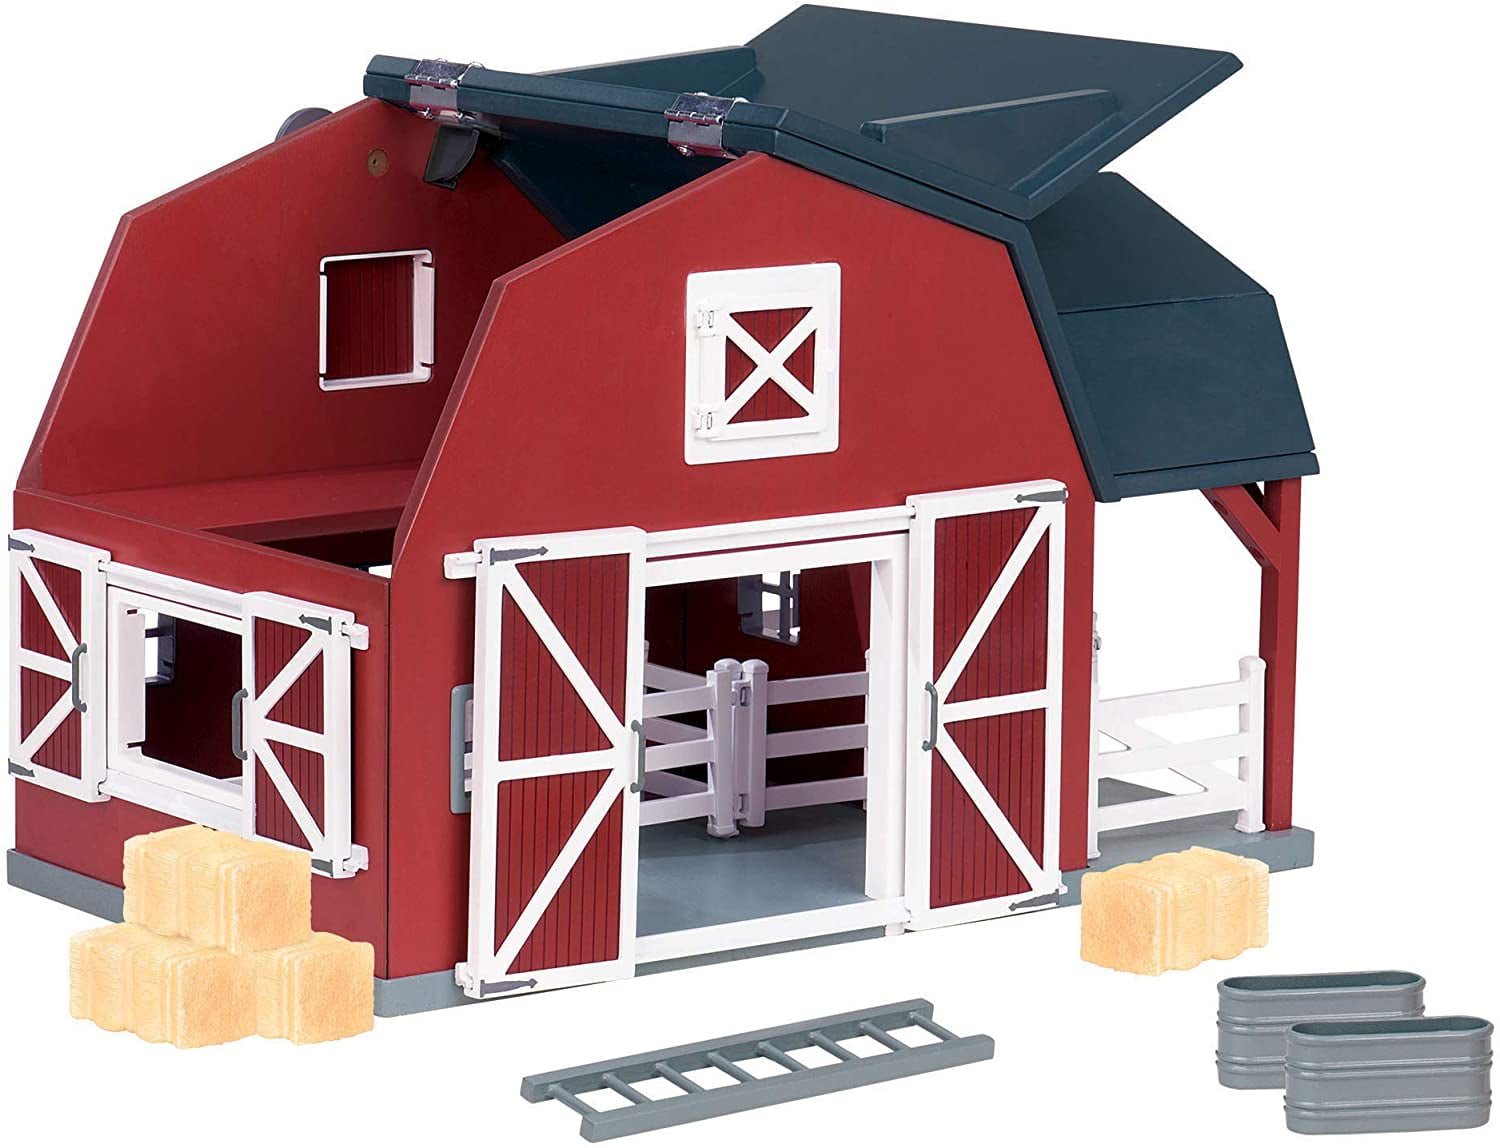 Toy Barn Farm Toys Playset for Kids Terra by Battat Wooden Animal Barn 